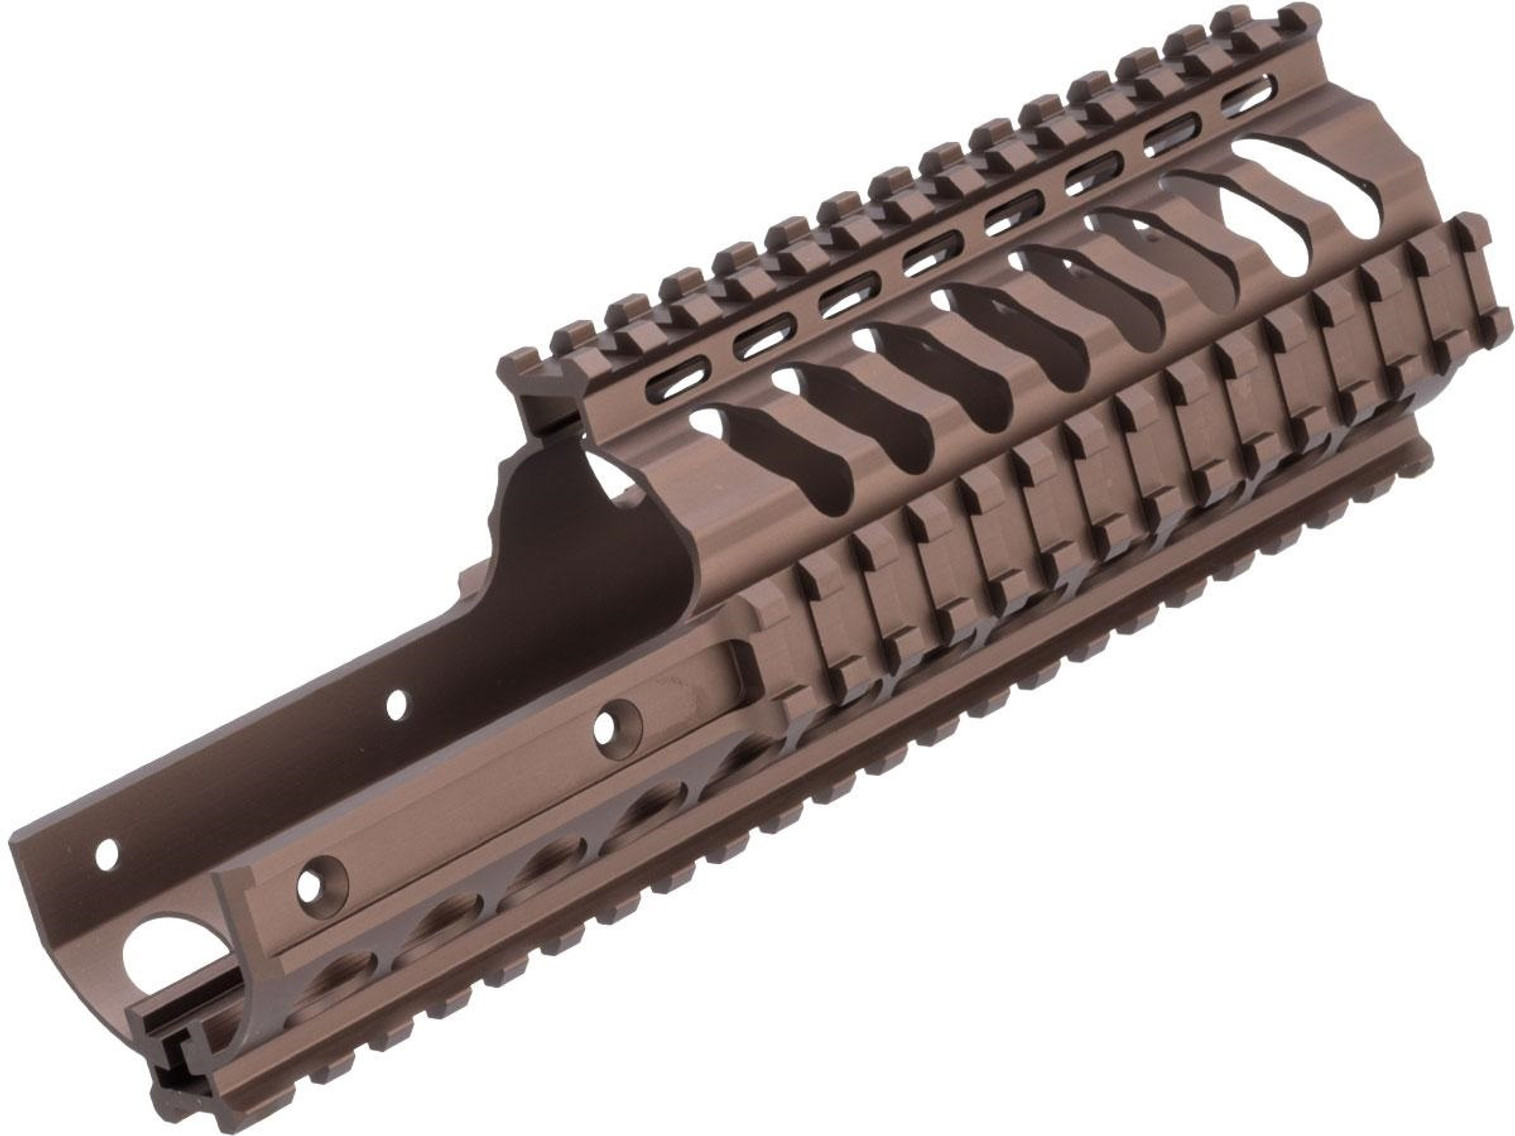 MATRIX Tactical CNC Rail Handguard for KRISS Vector AEG and Gas Blowback Airsoft Rifles
